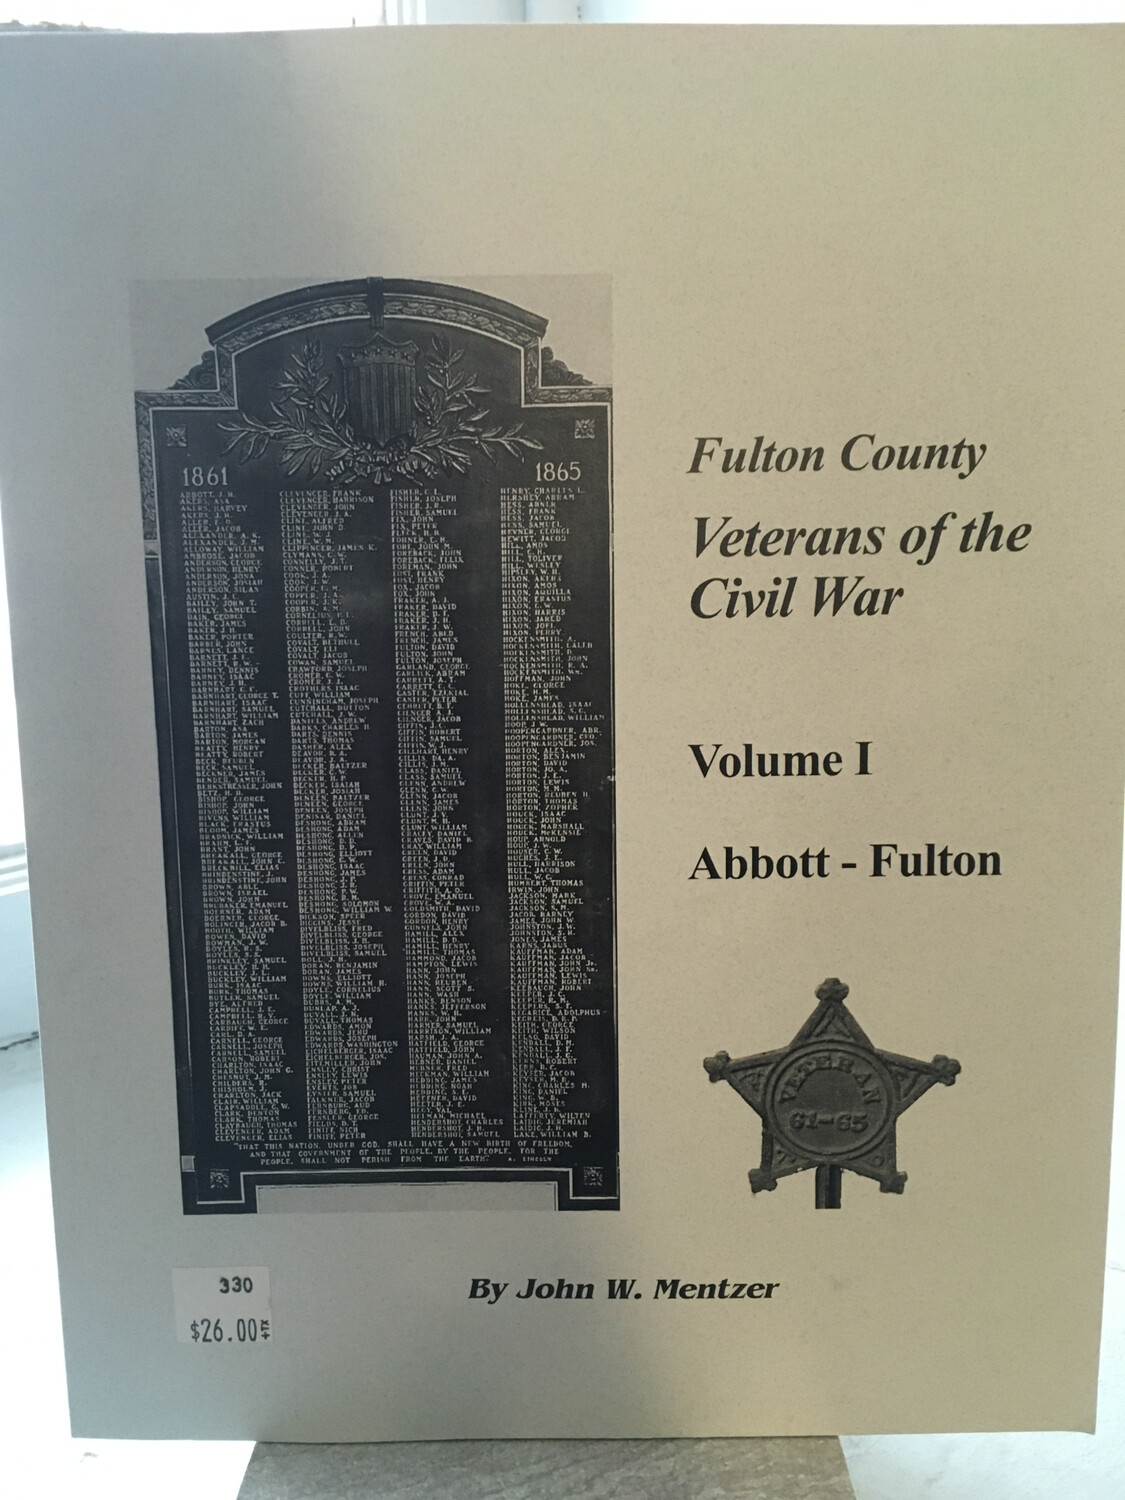 Fulton County: Veterans of the Civil War